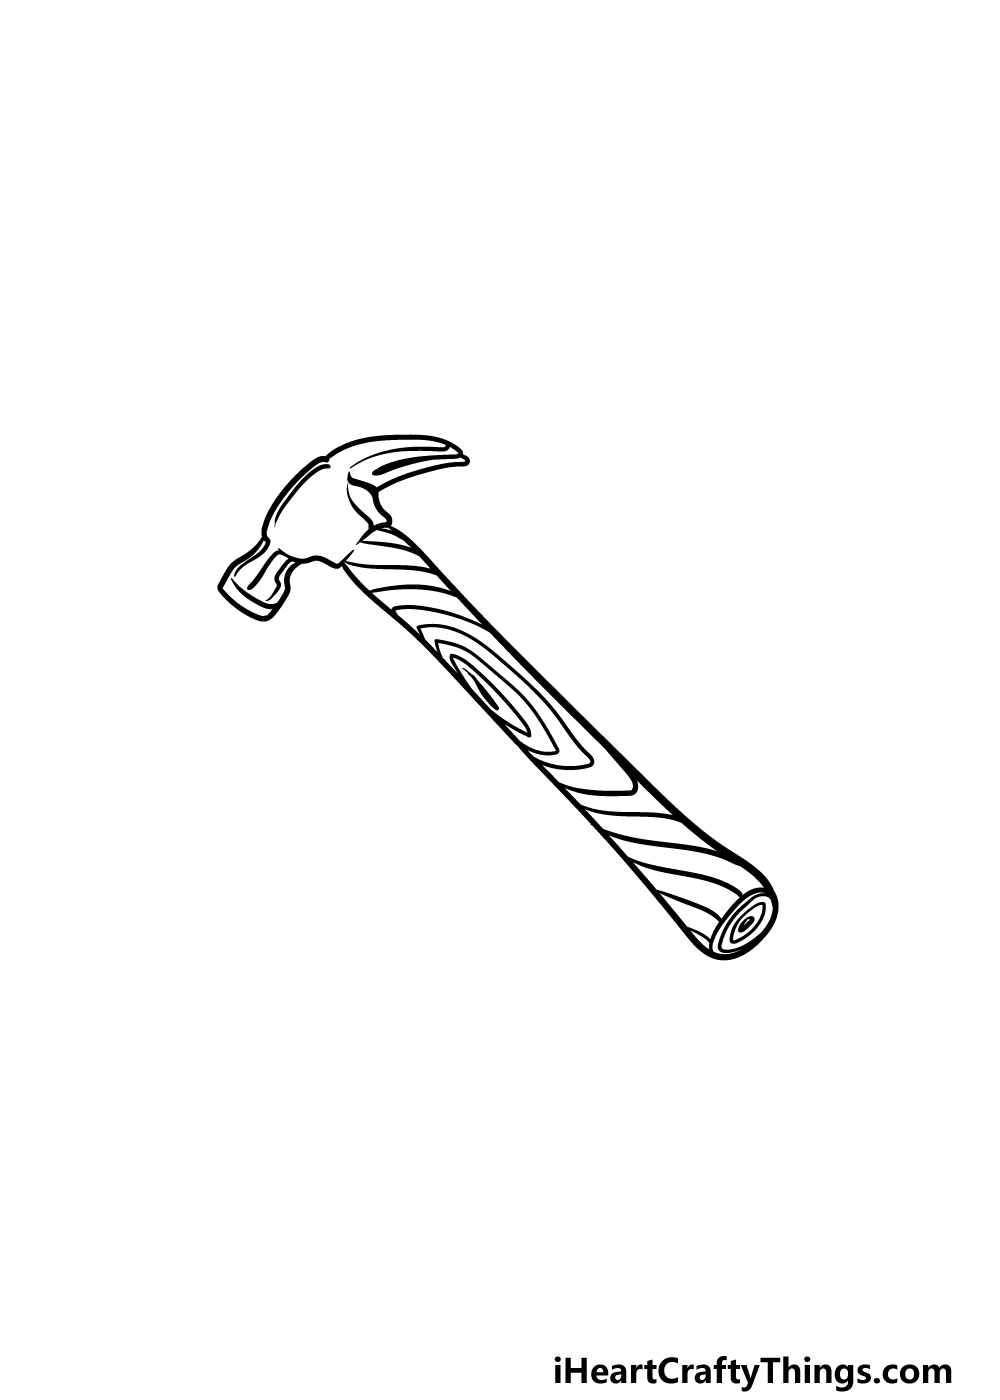 Claw hammer contour Royalty Free Vector Image - VectorStock